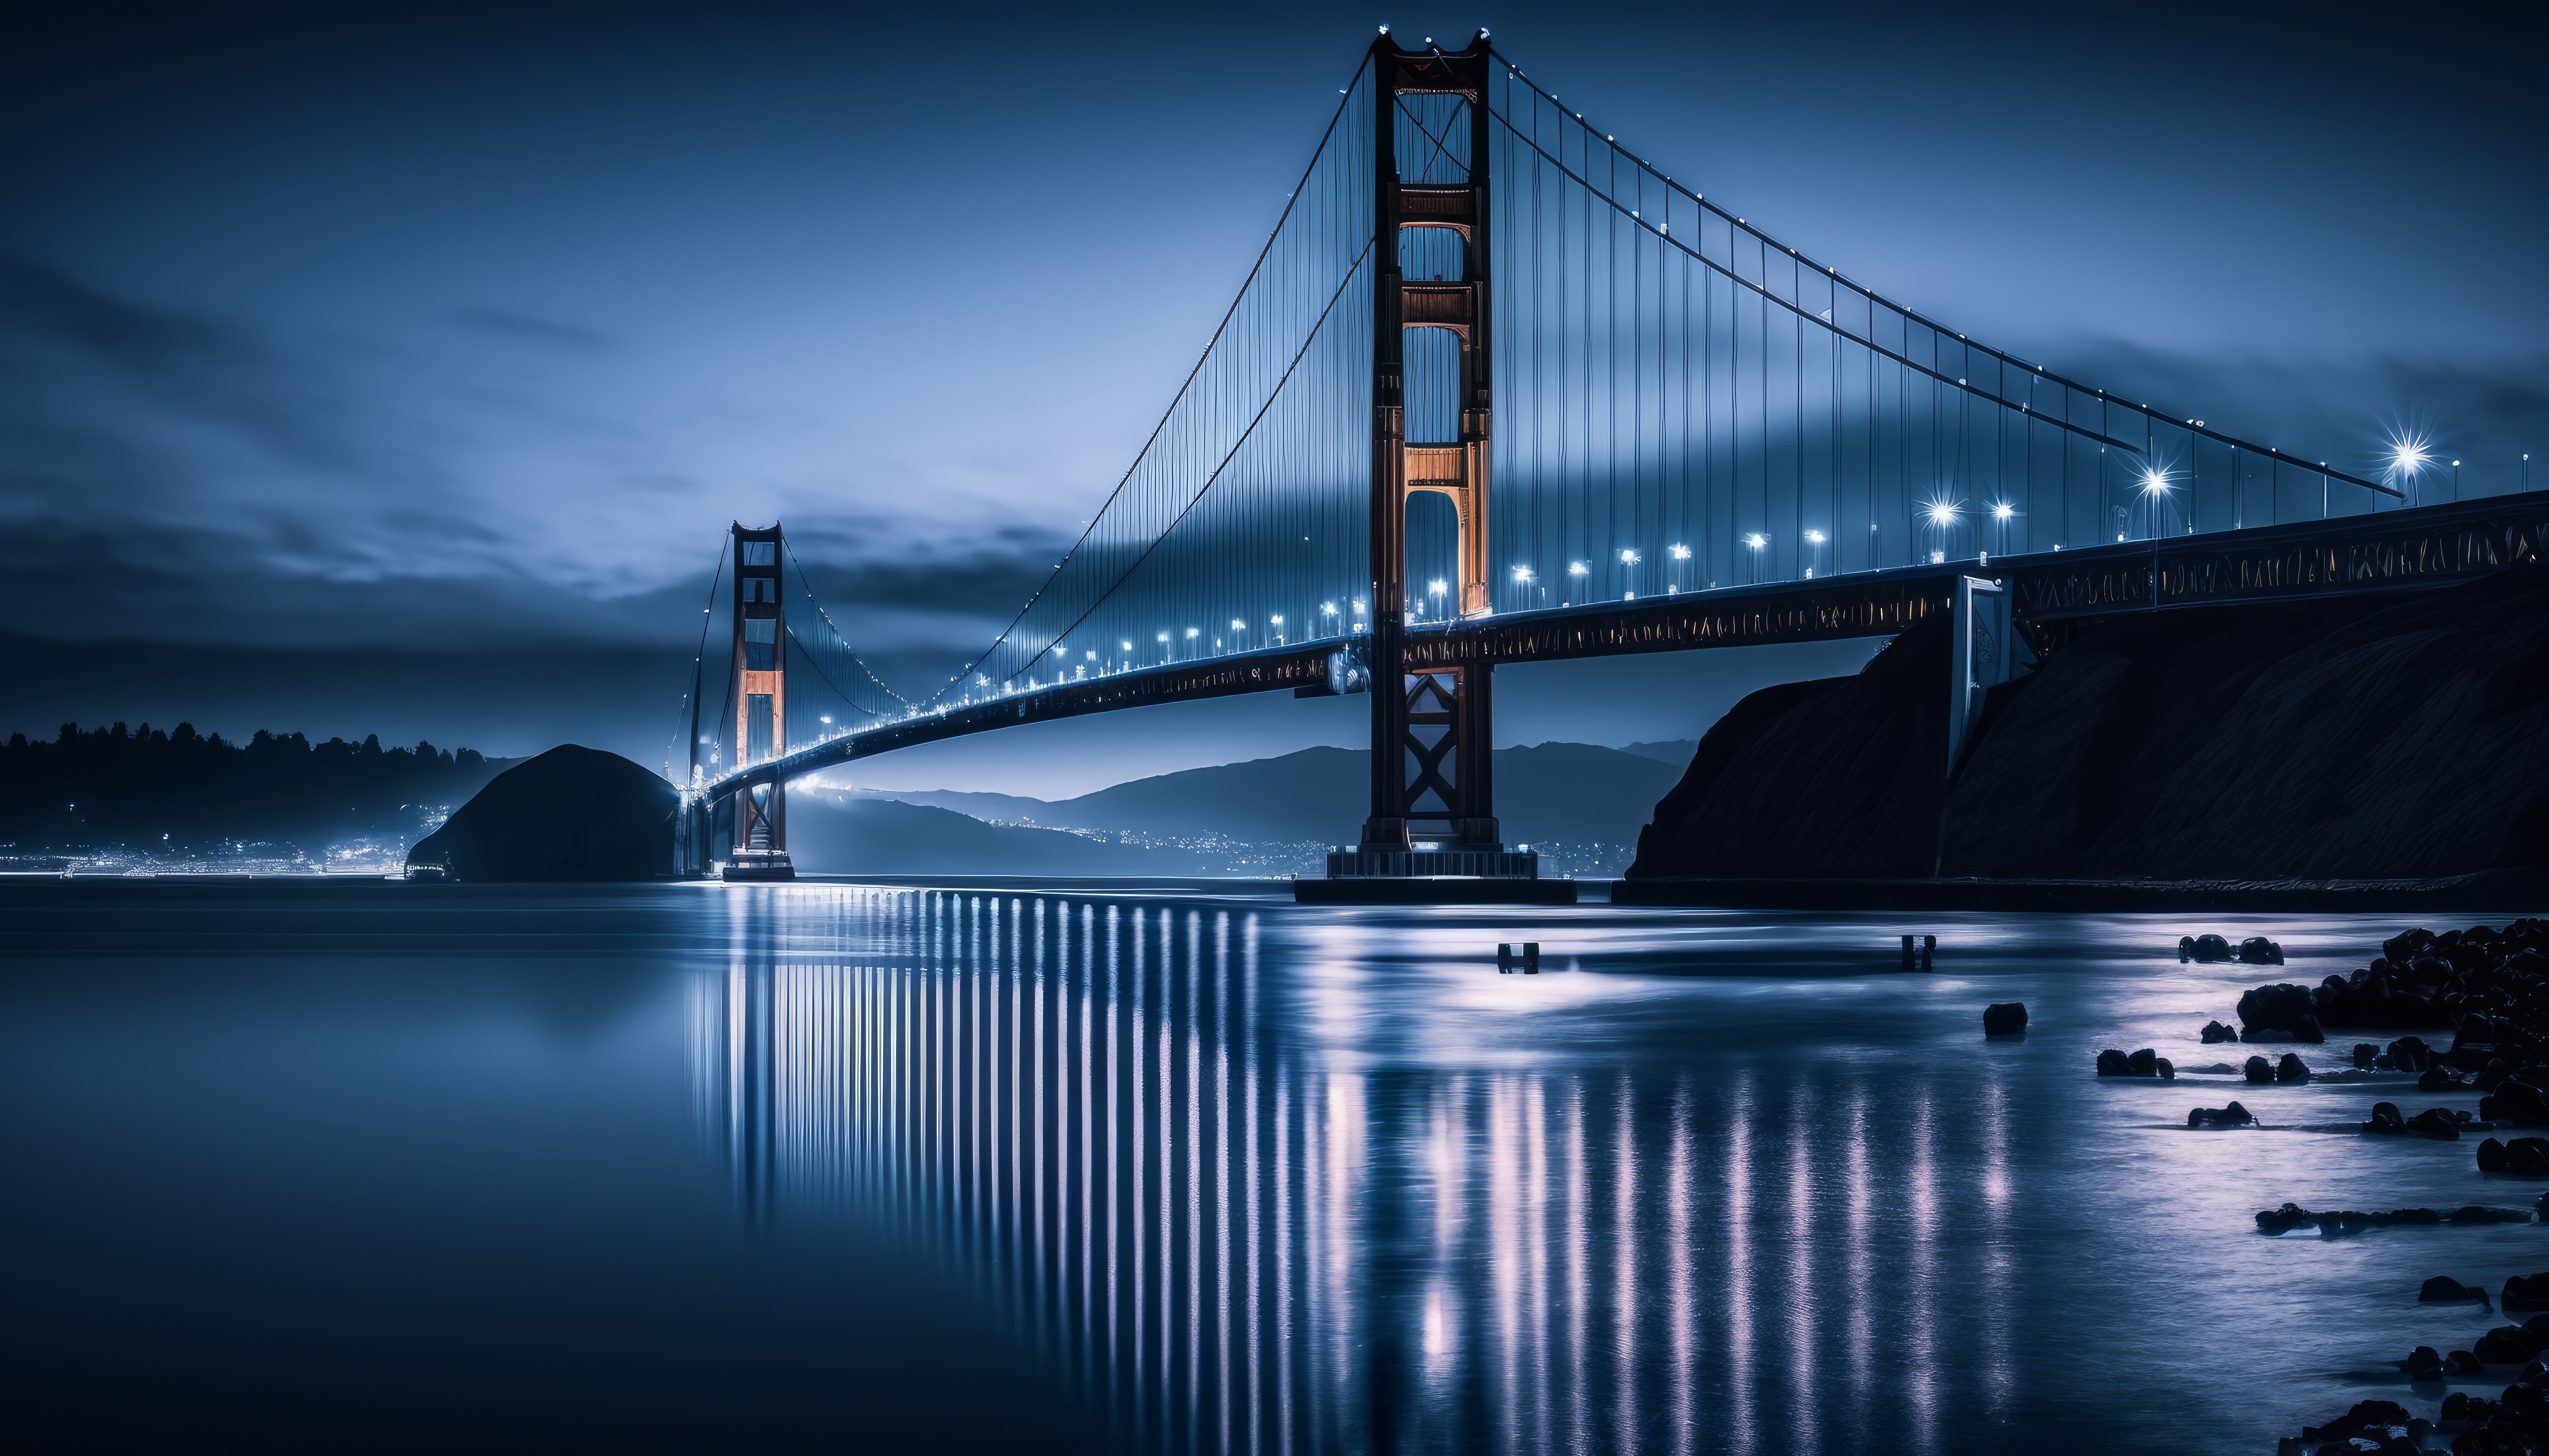 General 4579x2616 AI art Blue hour Golden Gate Bridge water reflection bridge lights sky